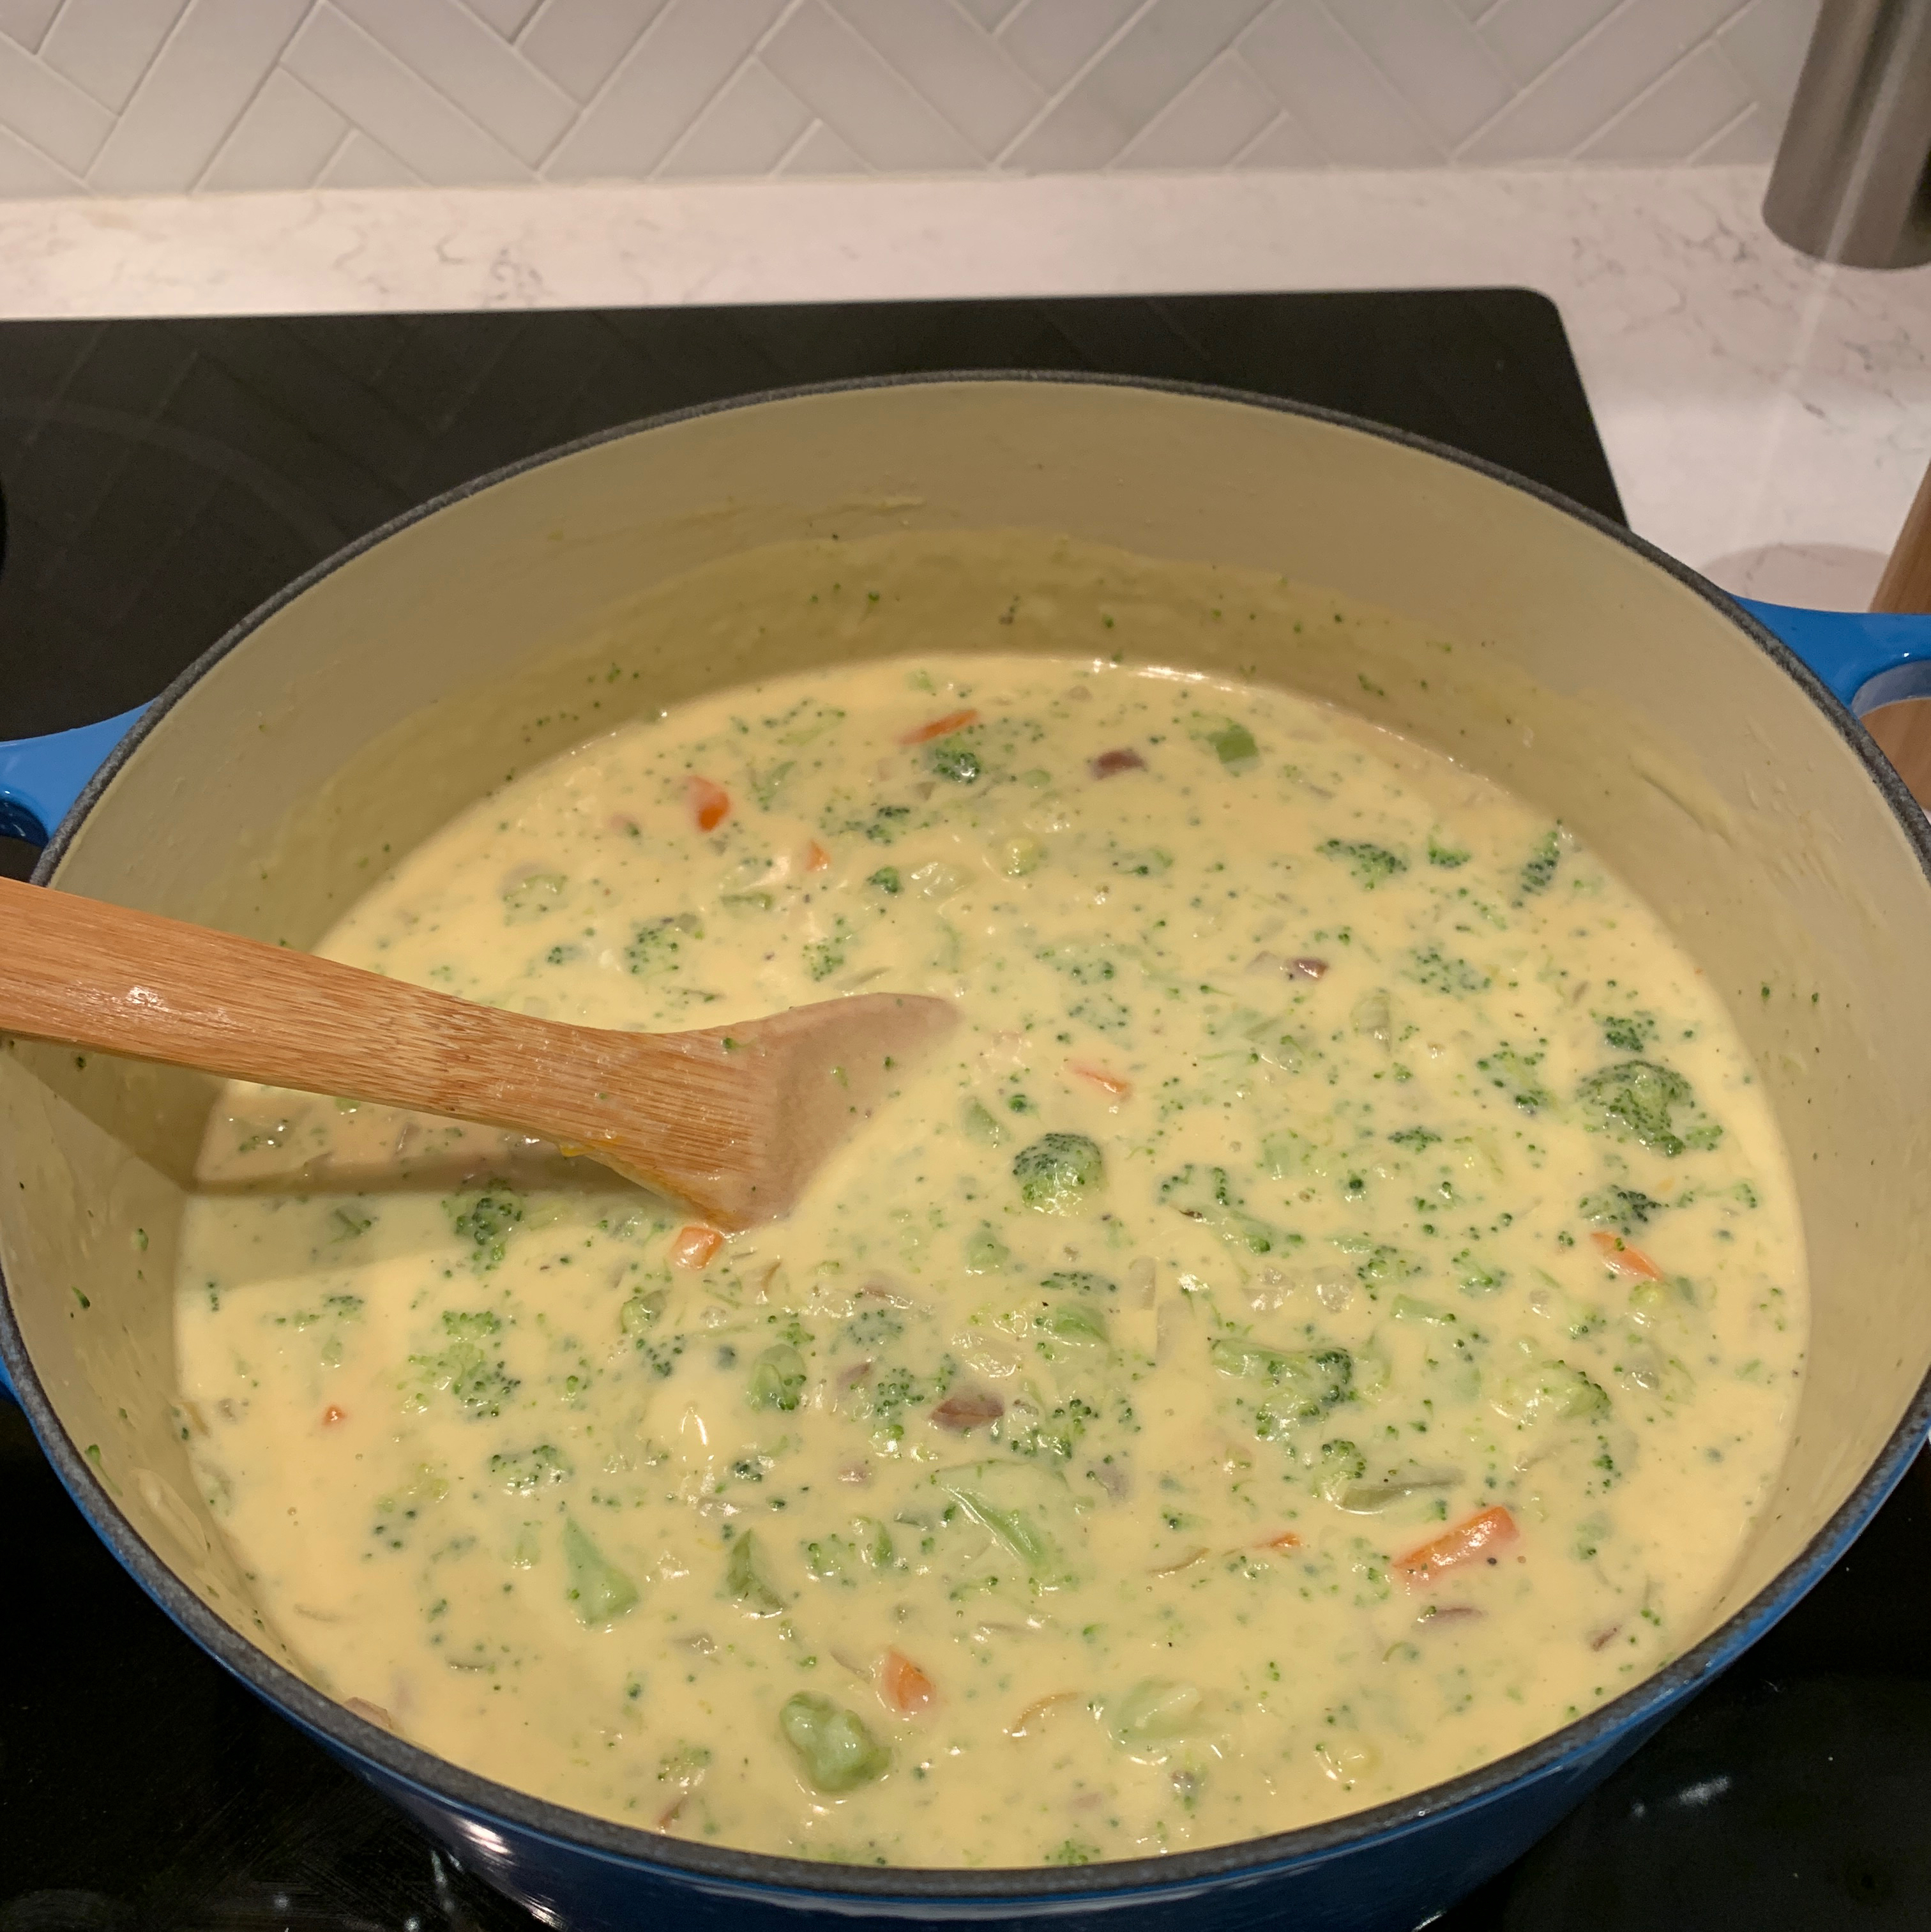 Sandy's Homemade Broccoli and Cheddar Soup 